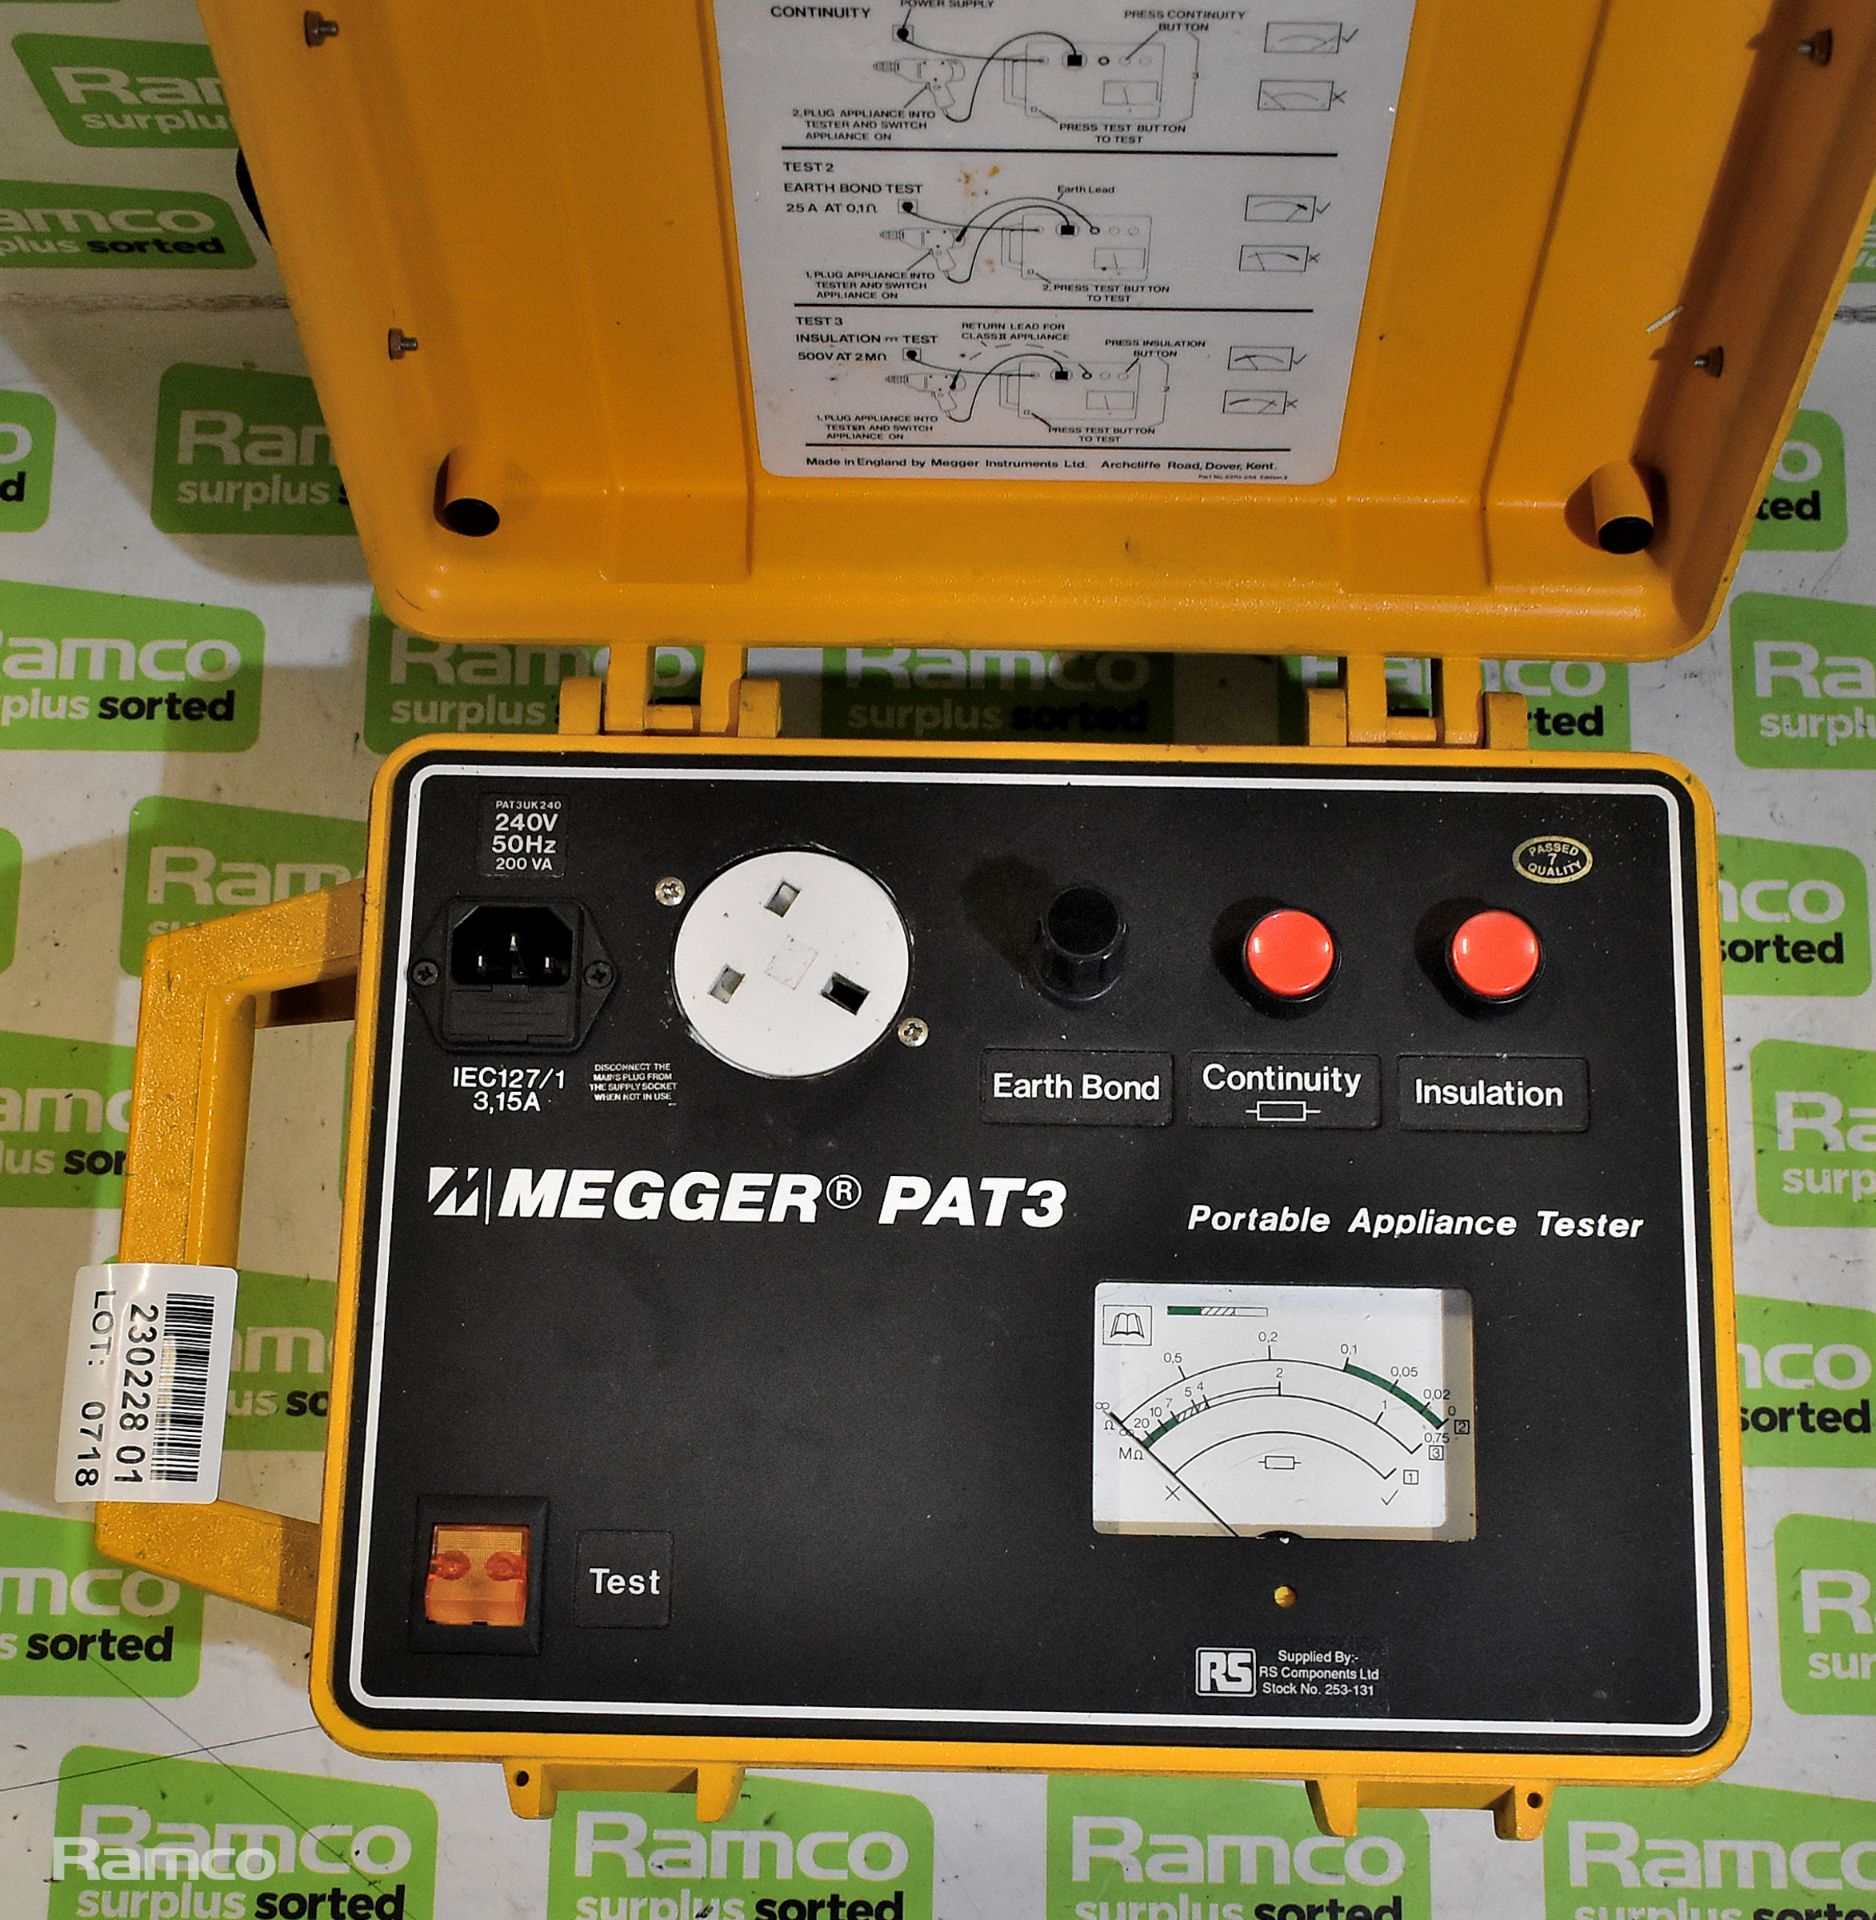 Megger PAT3 portable appliance tester - Image 2 of 4